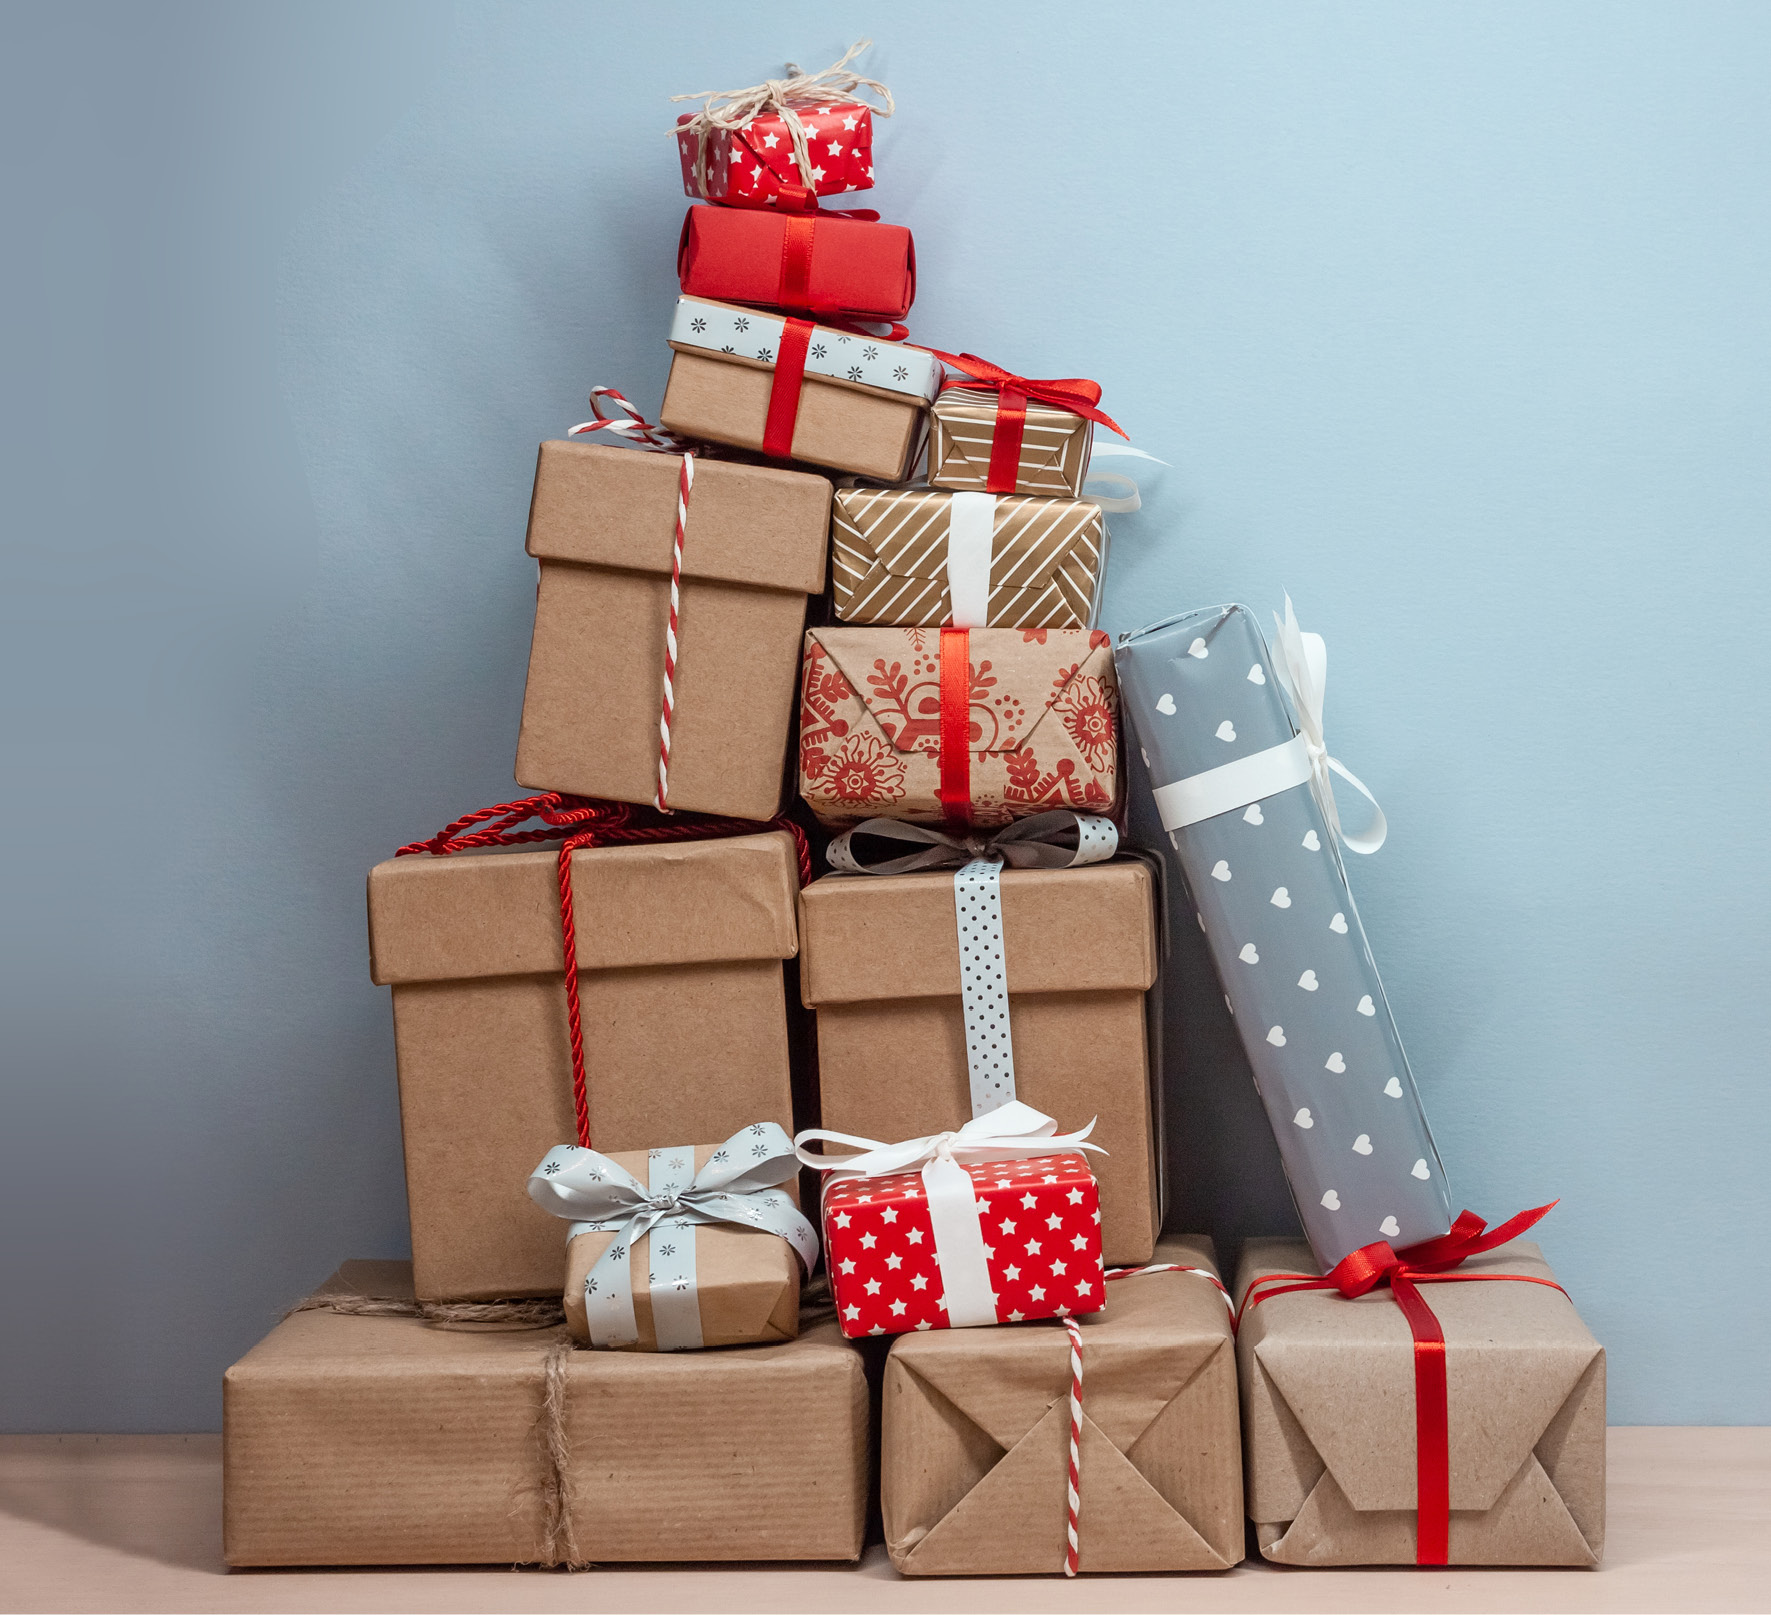 Christmas Gift Ideas on A Budget